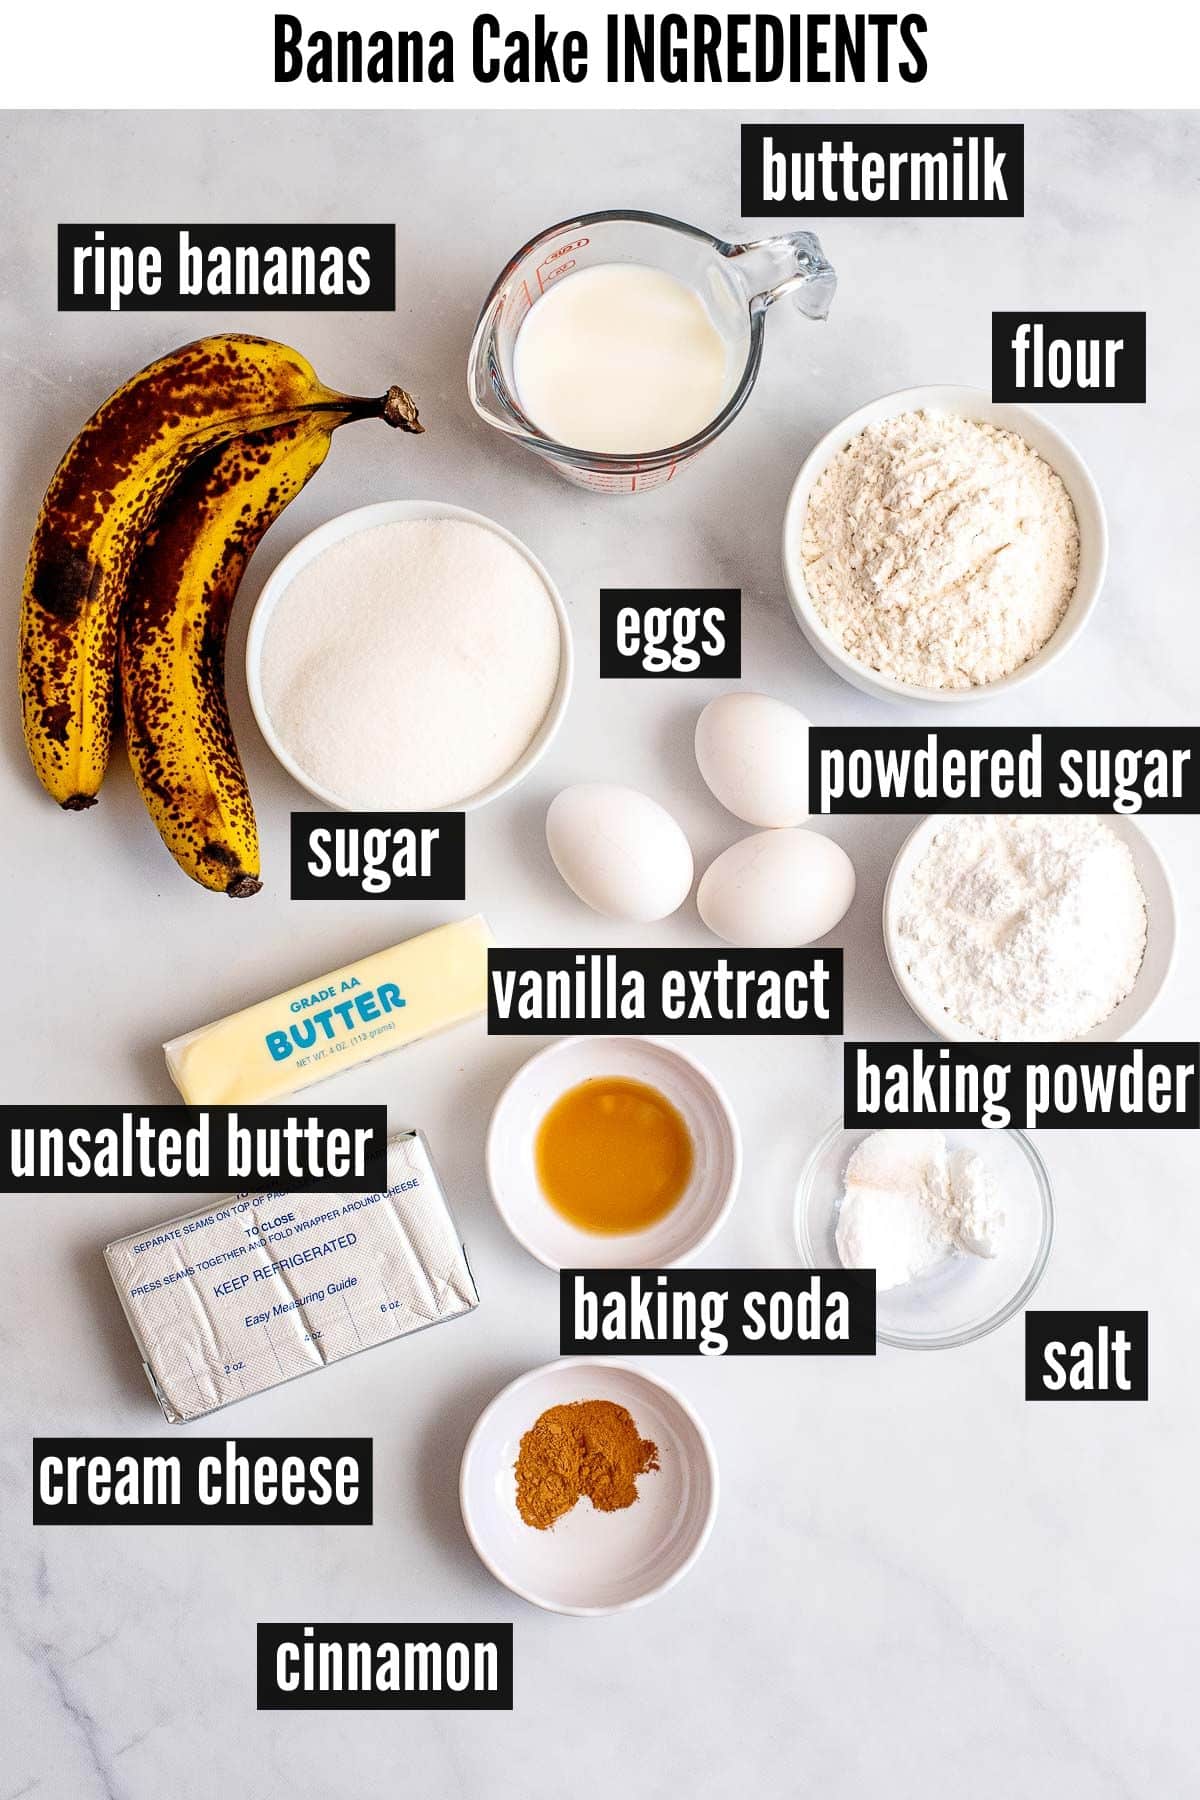 banana cake labelled ingredients.